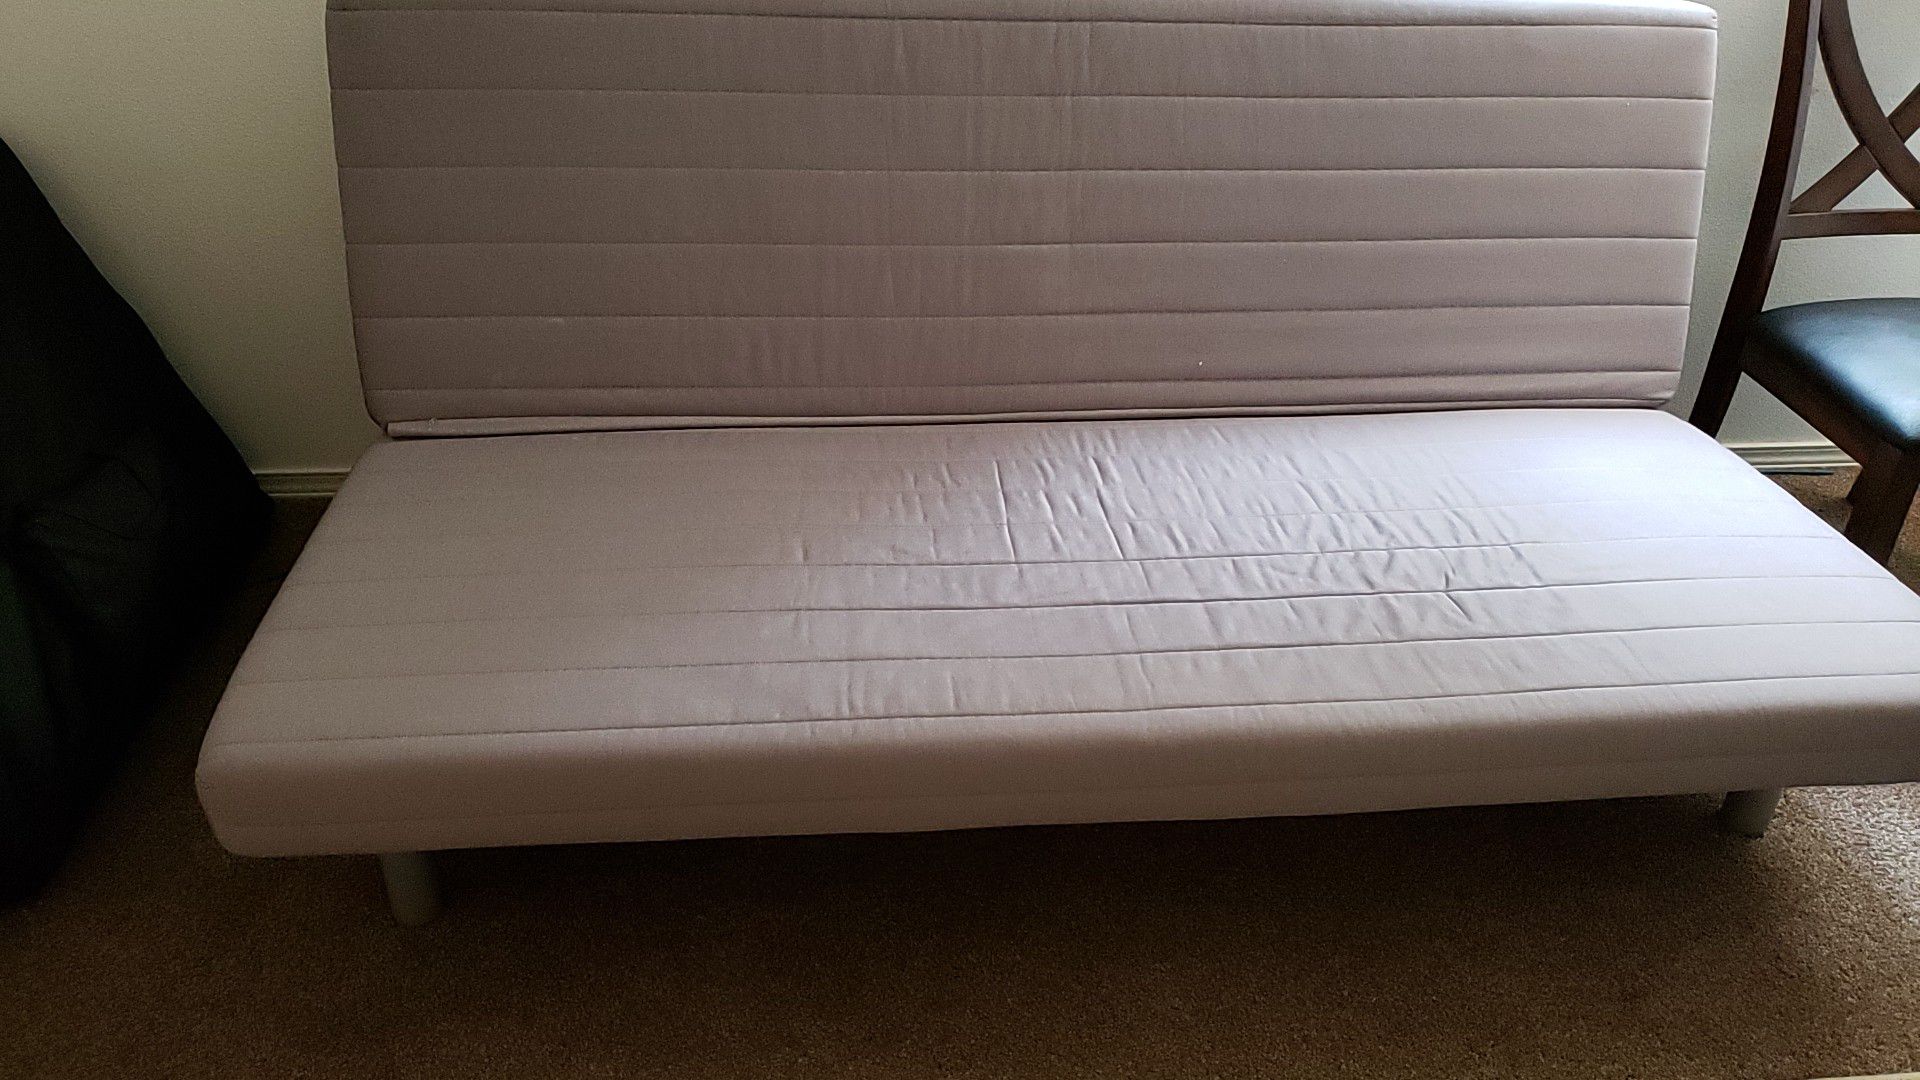 Ikea futon . Queen size bed